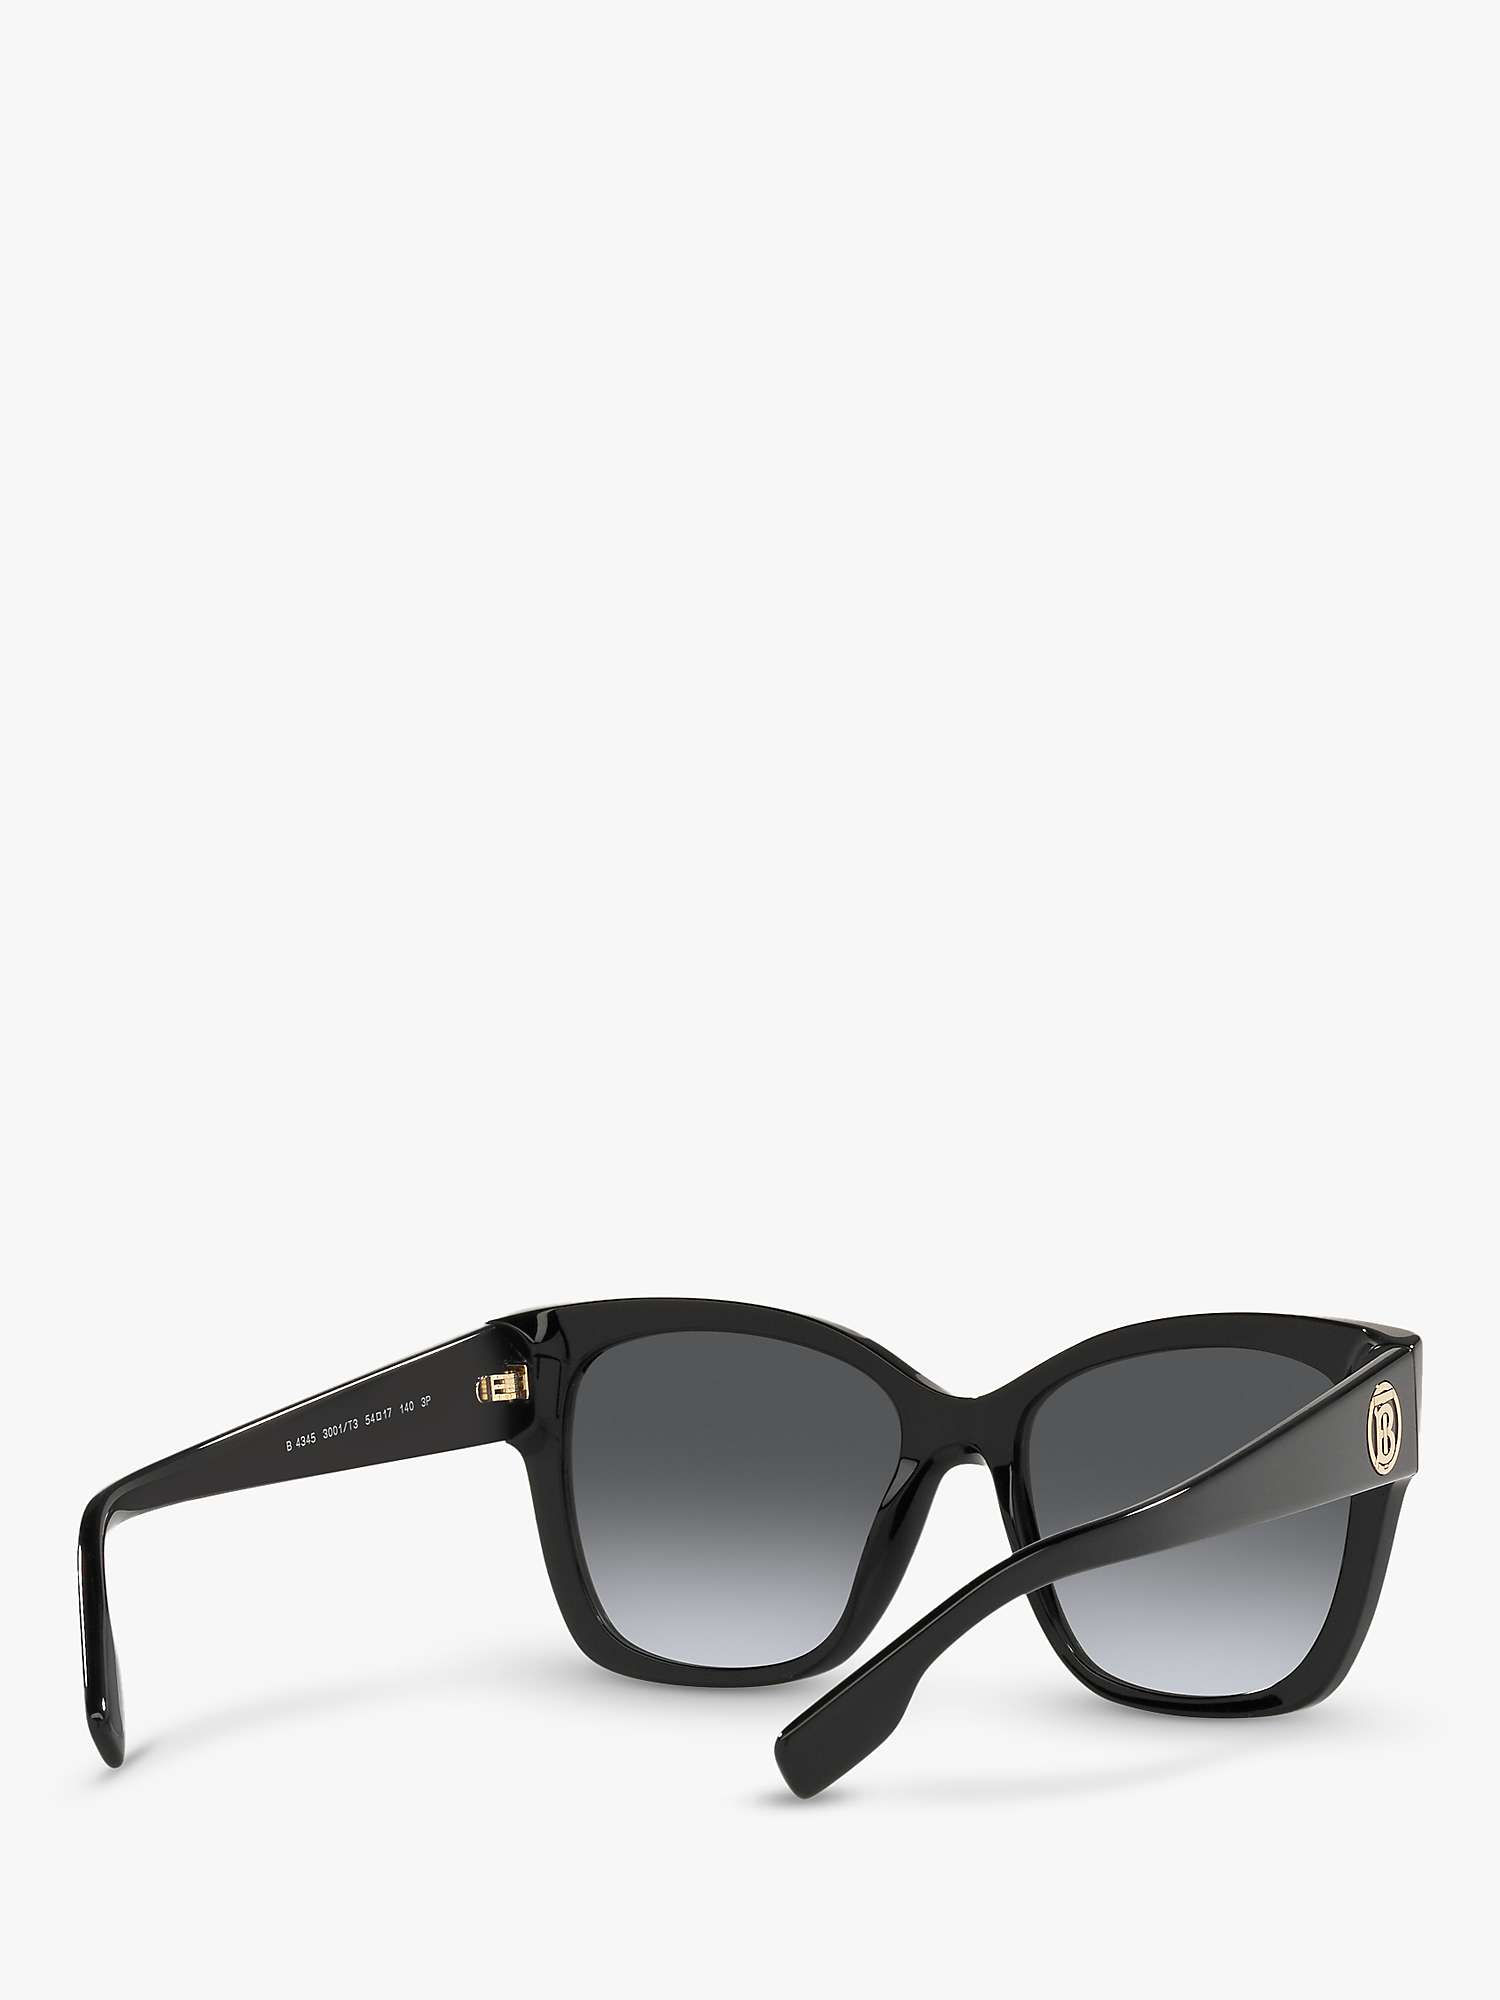 Buy Burberry BE4345 Women's Ruth Polarised Square Sunglasses, Black/Grey Gradient Online at johnlewis.com